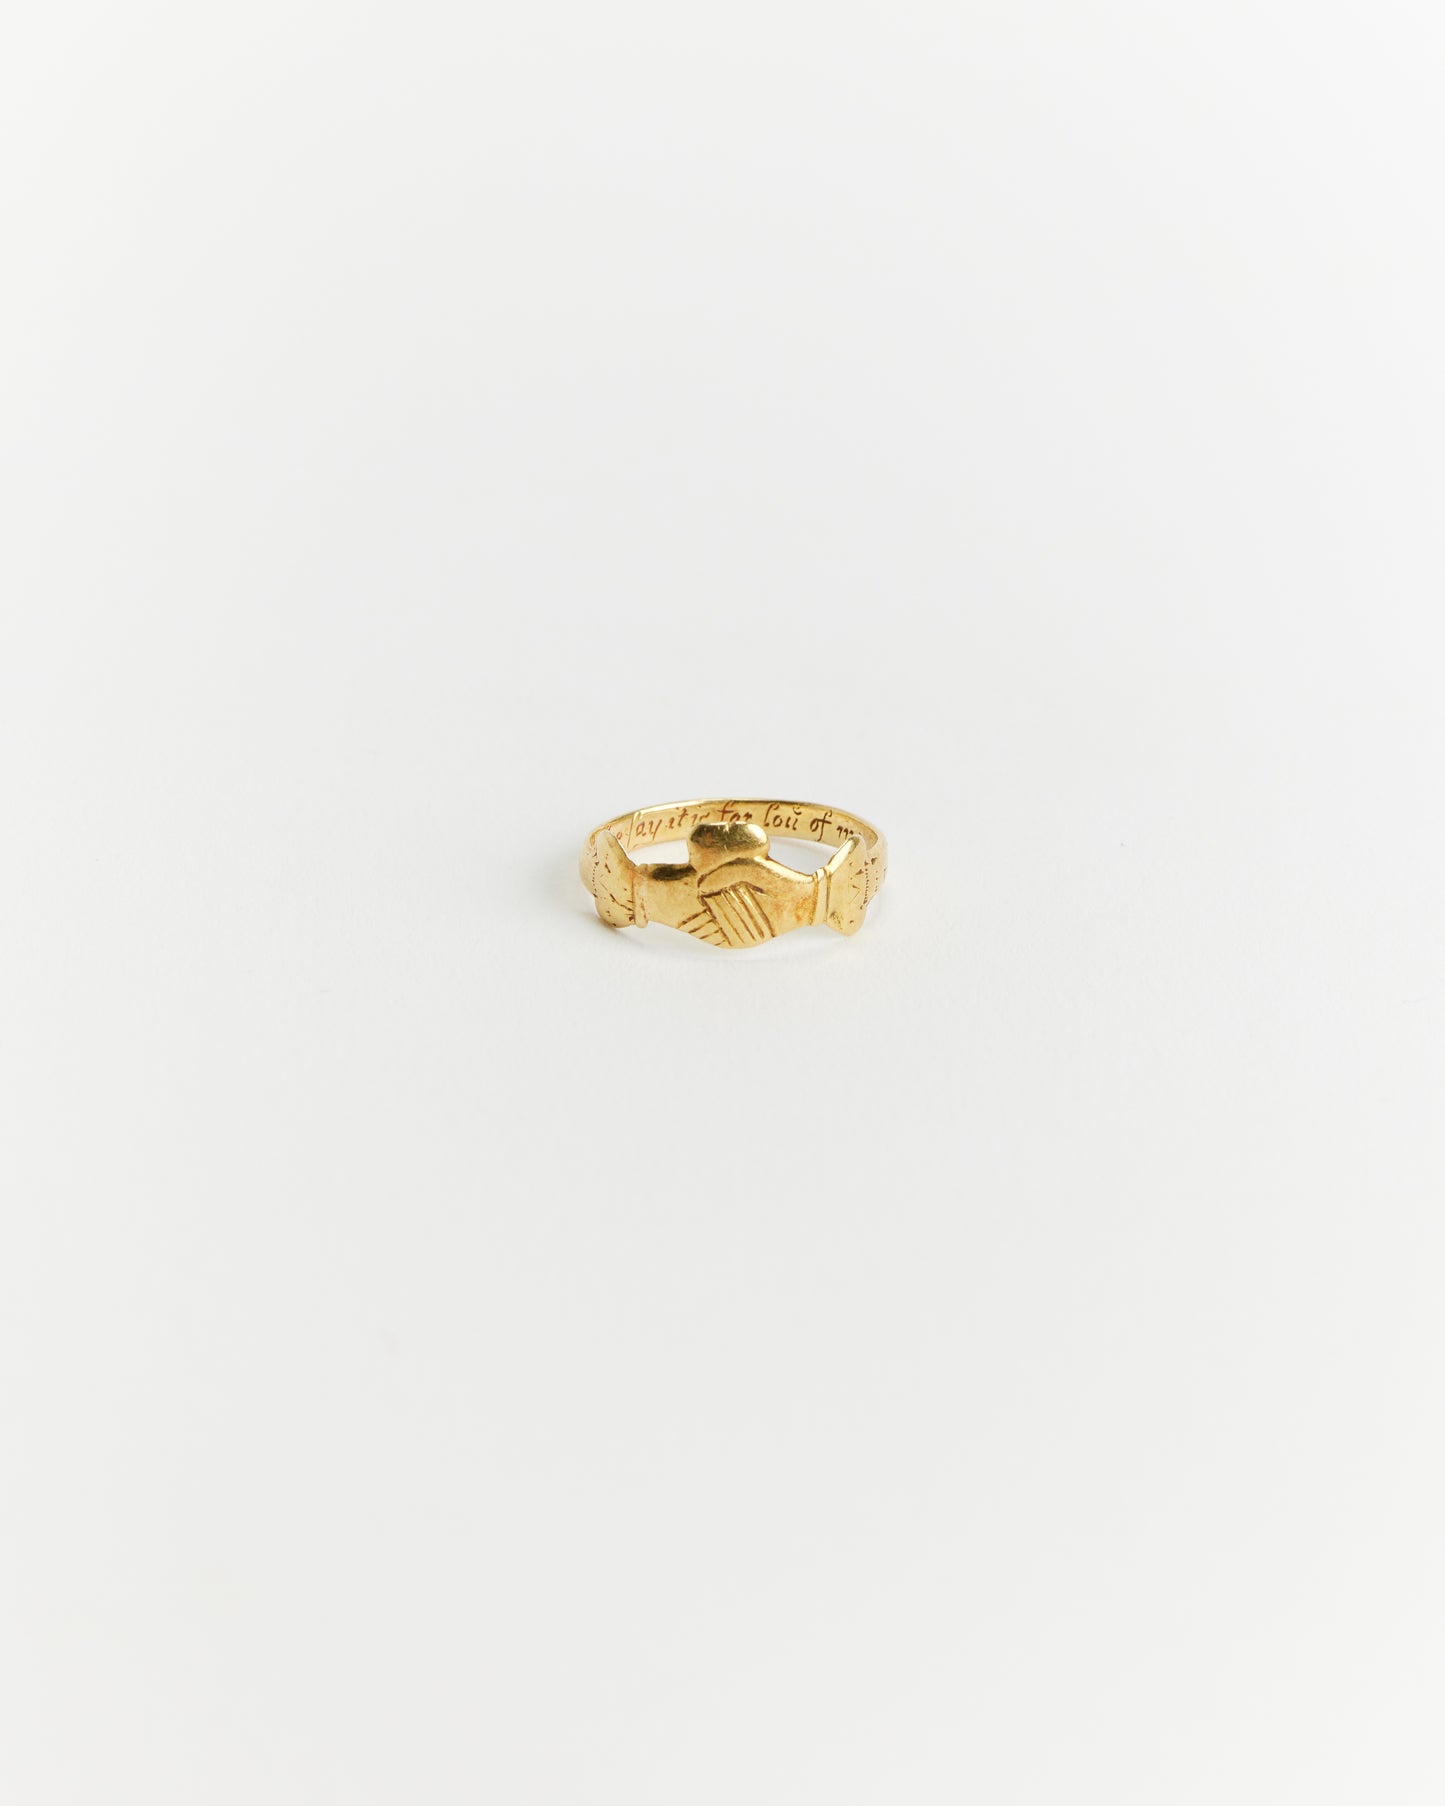 17th Century Posey Ring